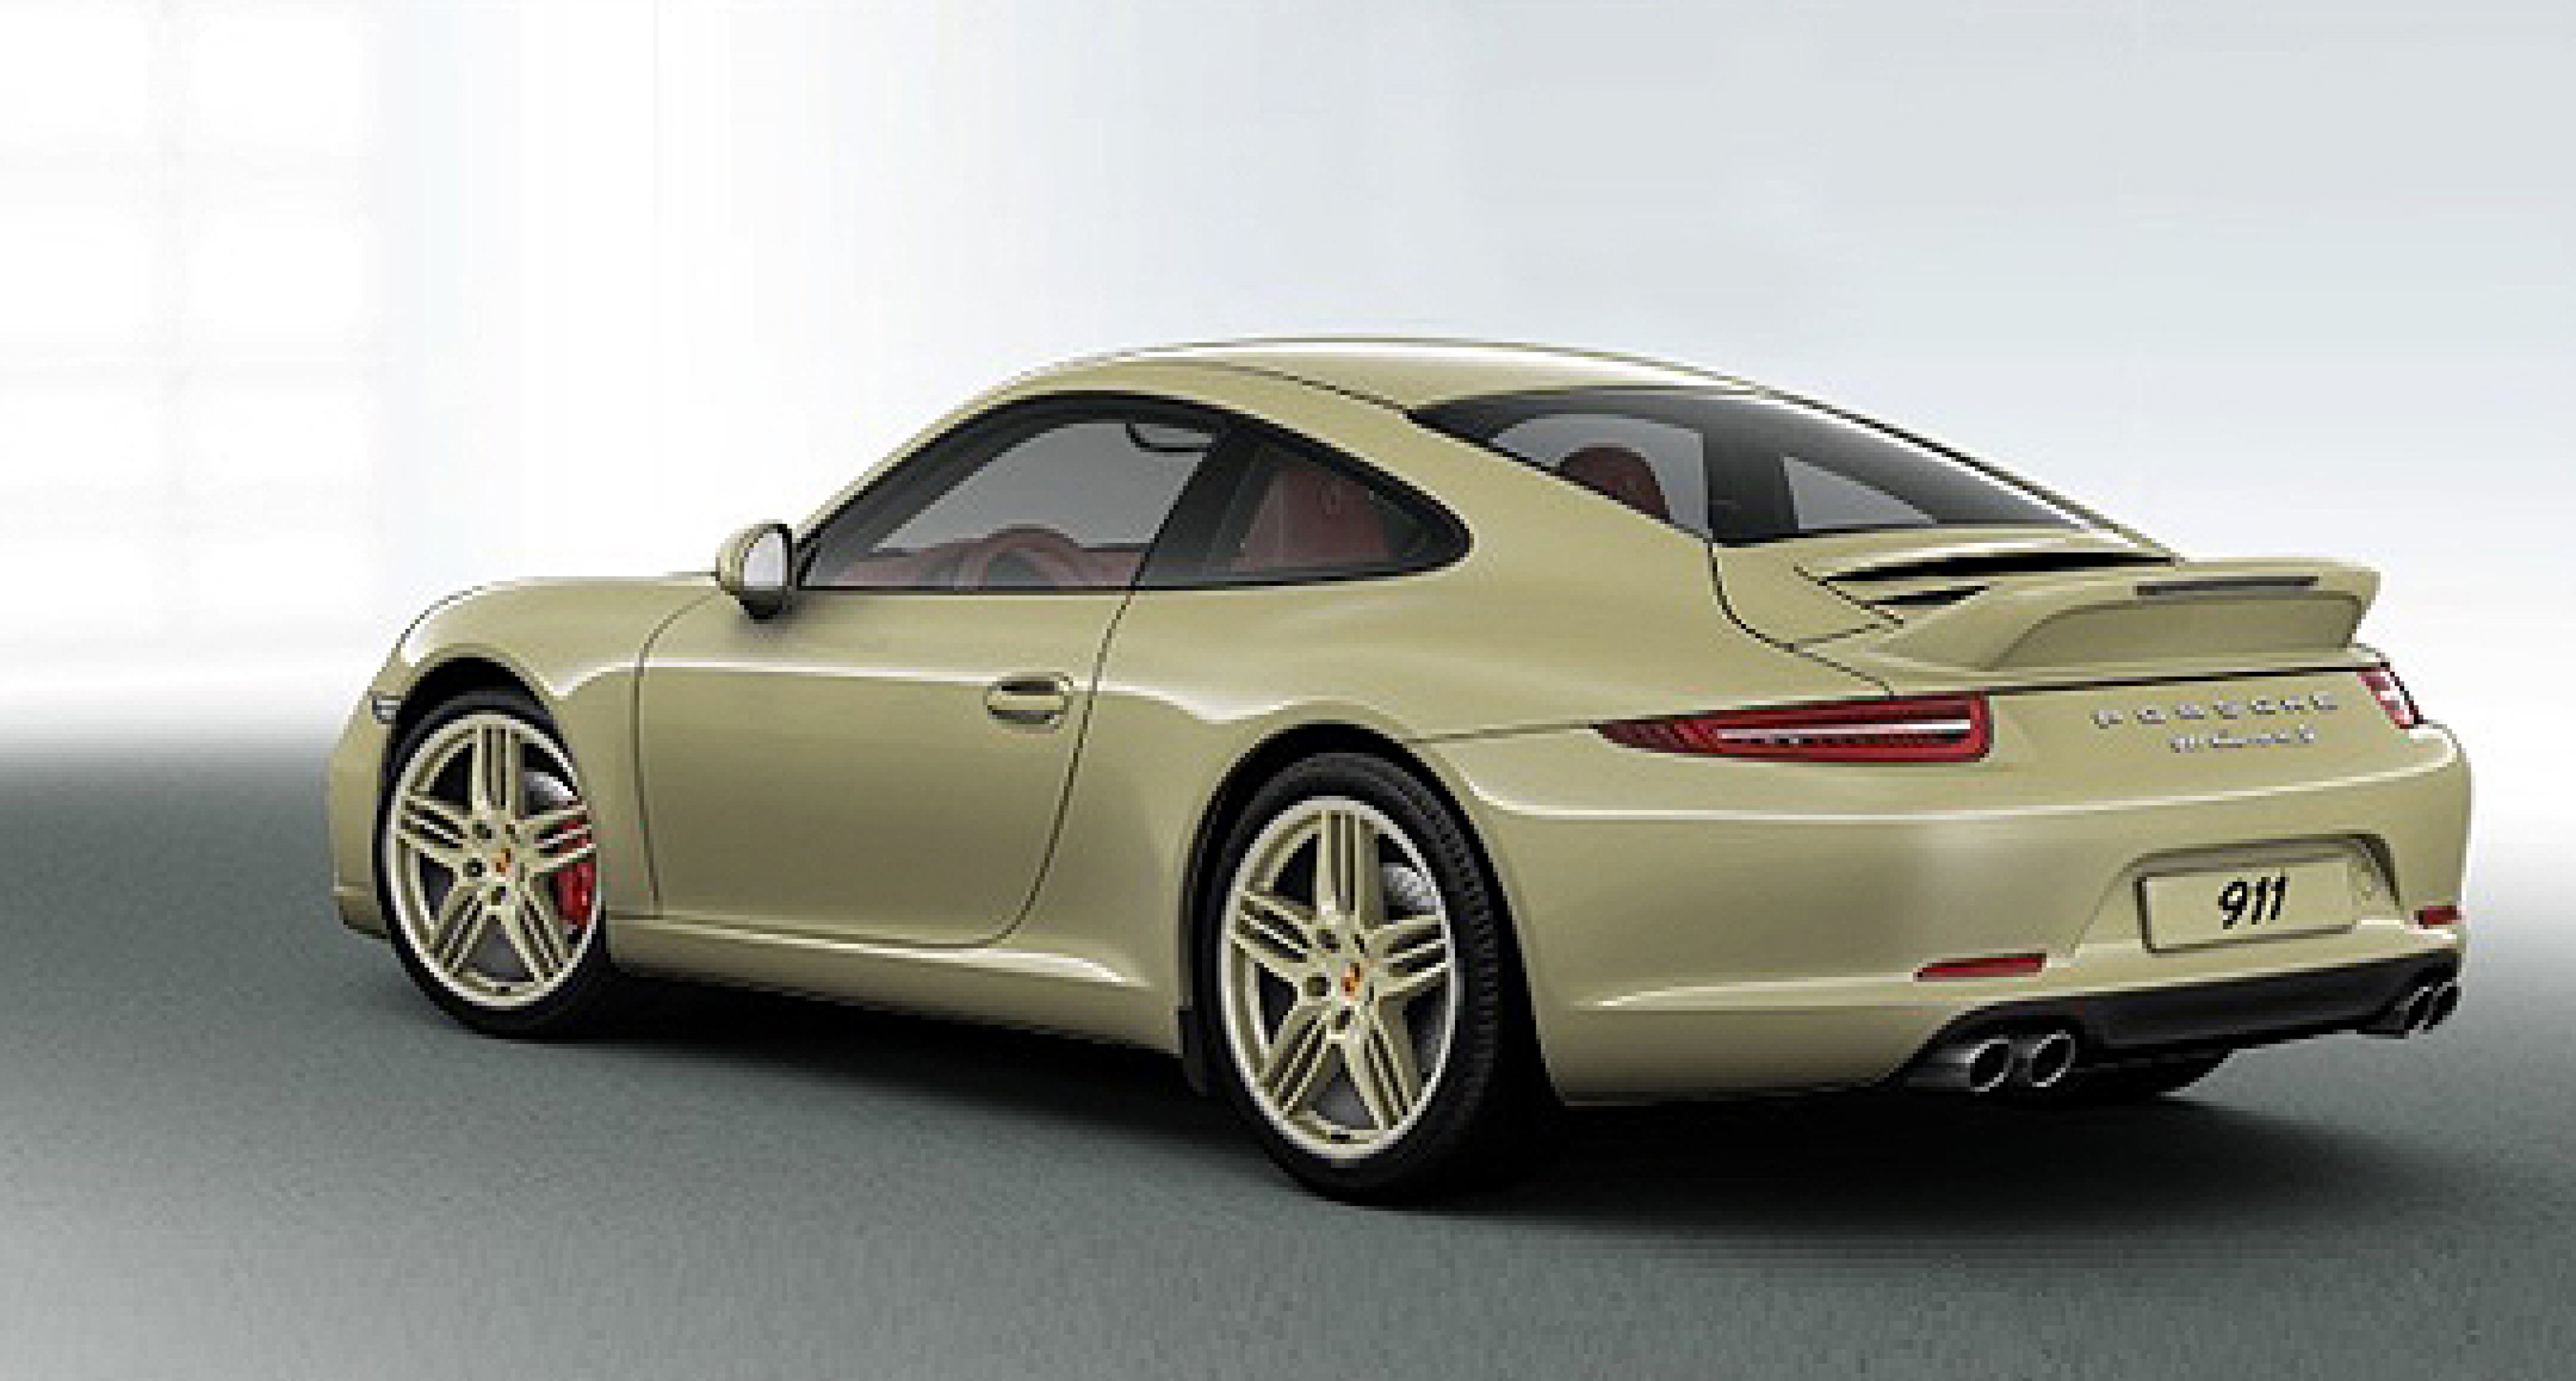 2012 Porsche 911: Online configurator goes live